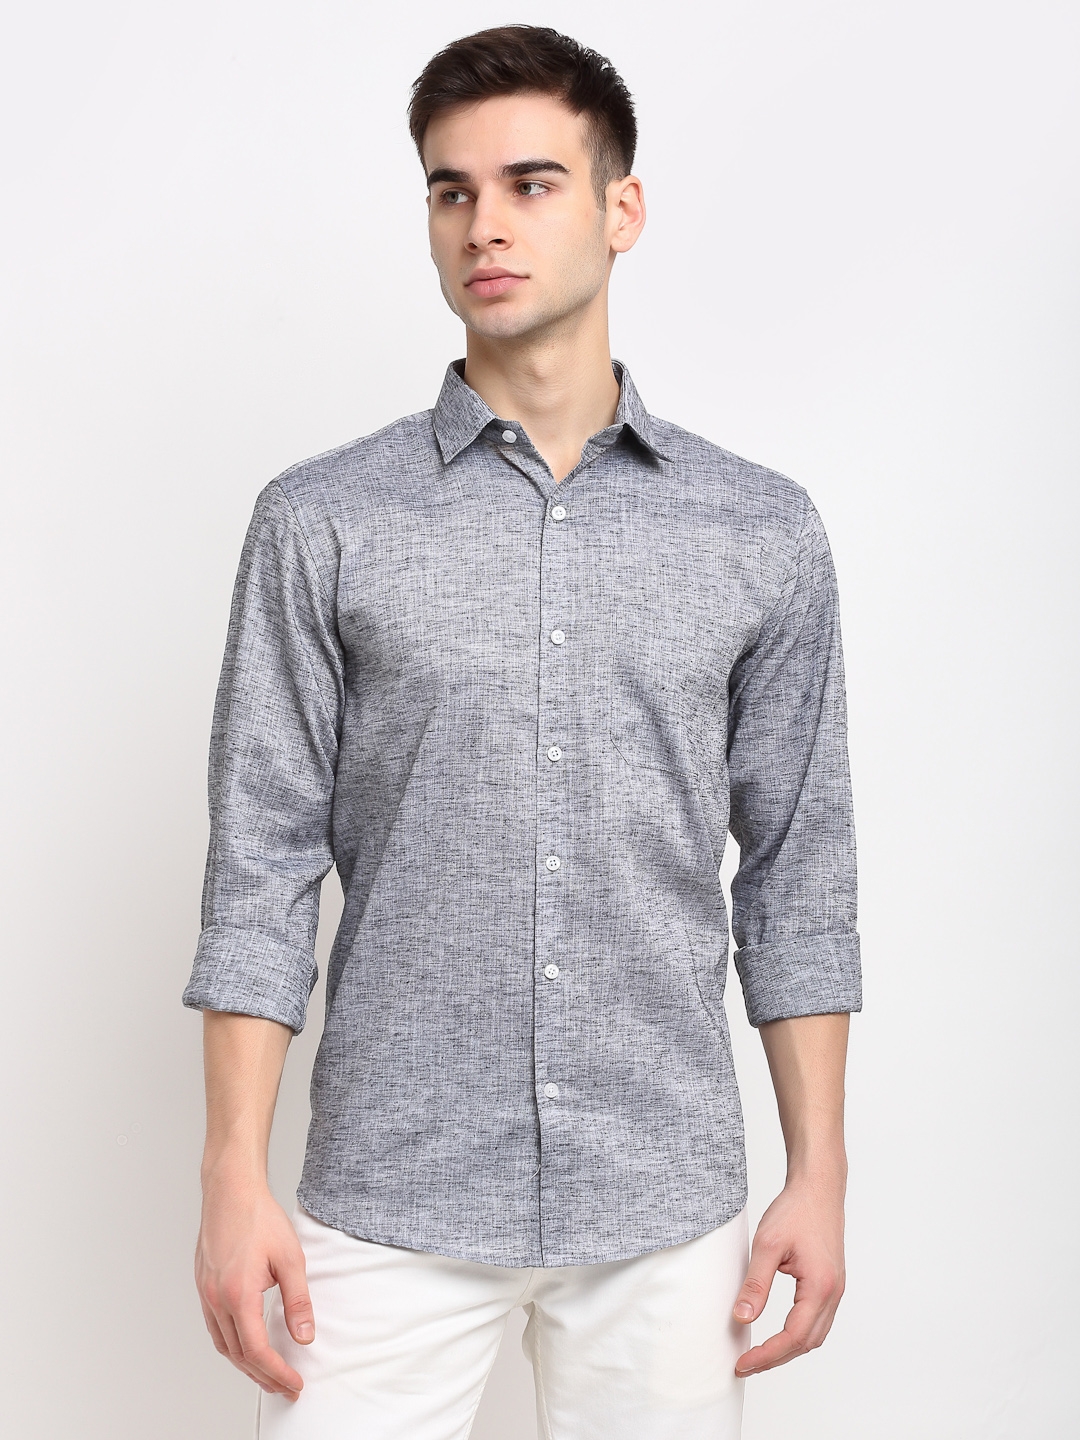 Men's Solid Cotton Casual Shirt 